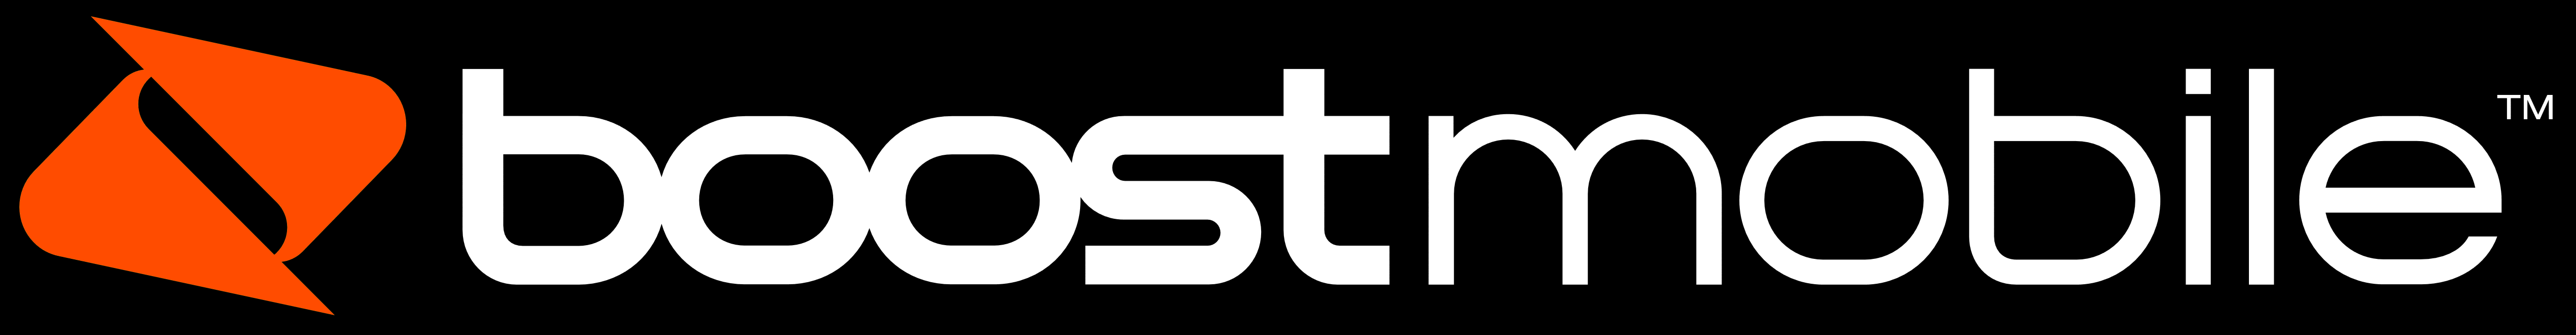 Boost Mobile – Logos Download